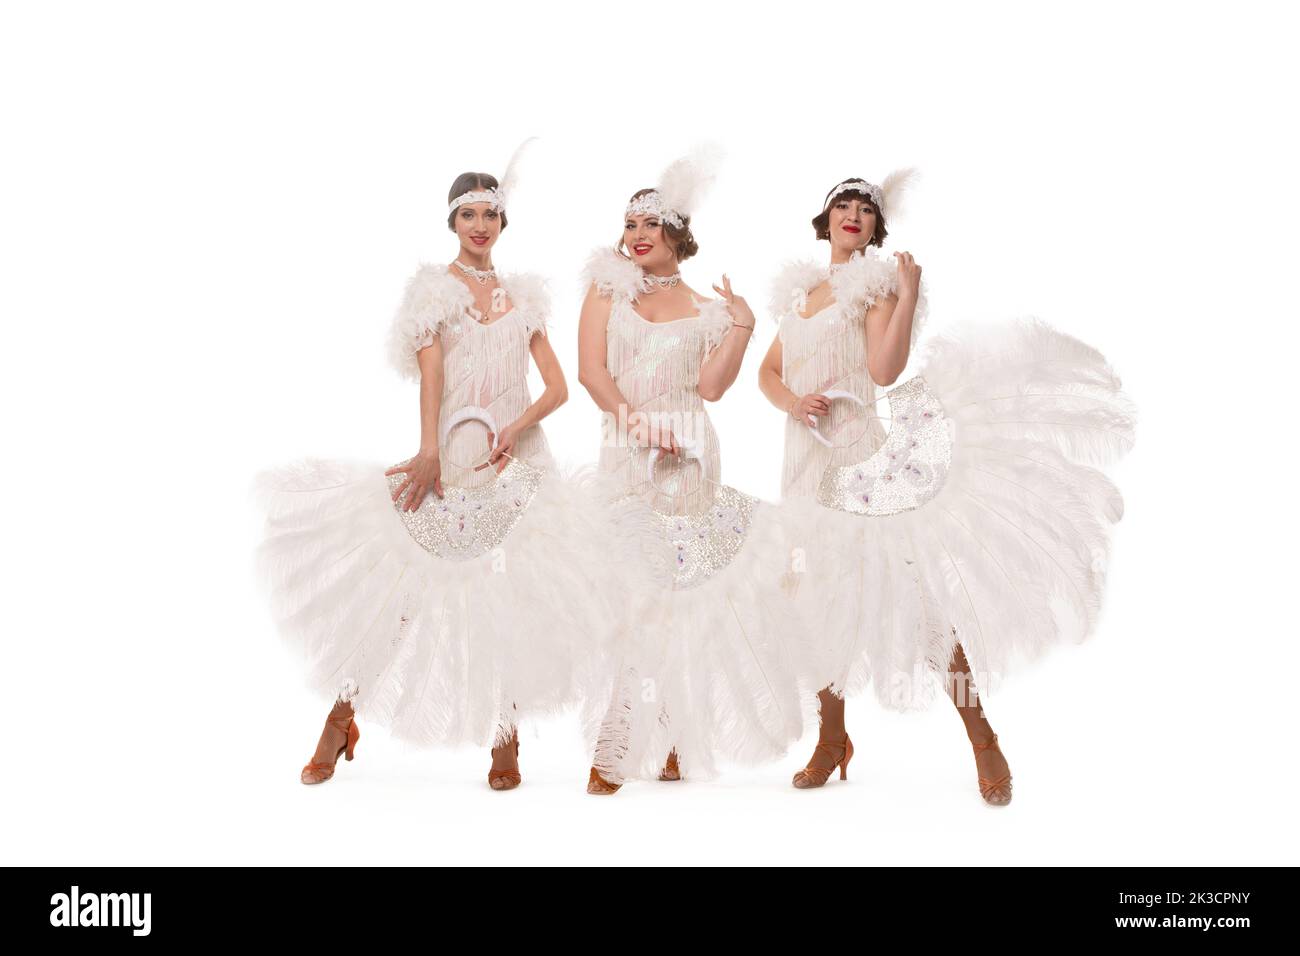 Glad women in burlesque dresses in studio Stock Photo